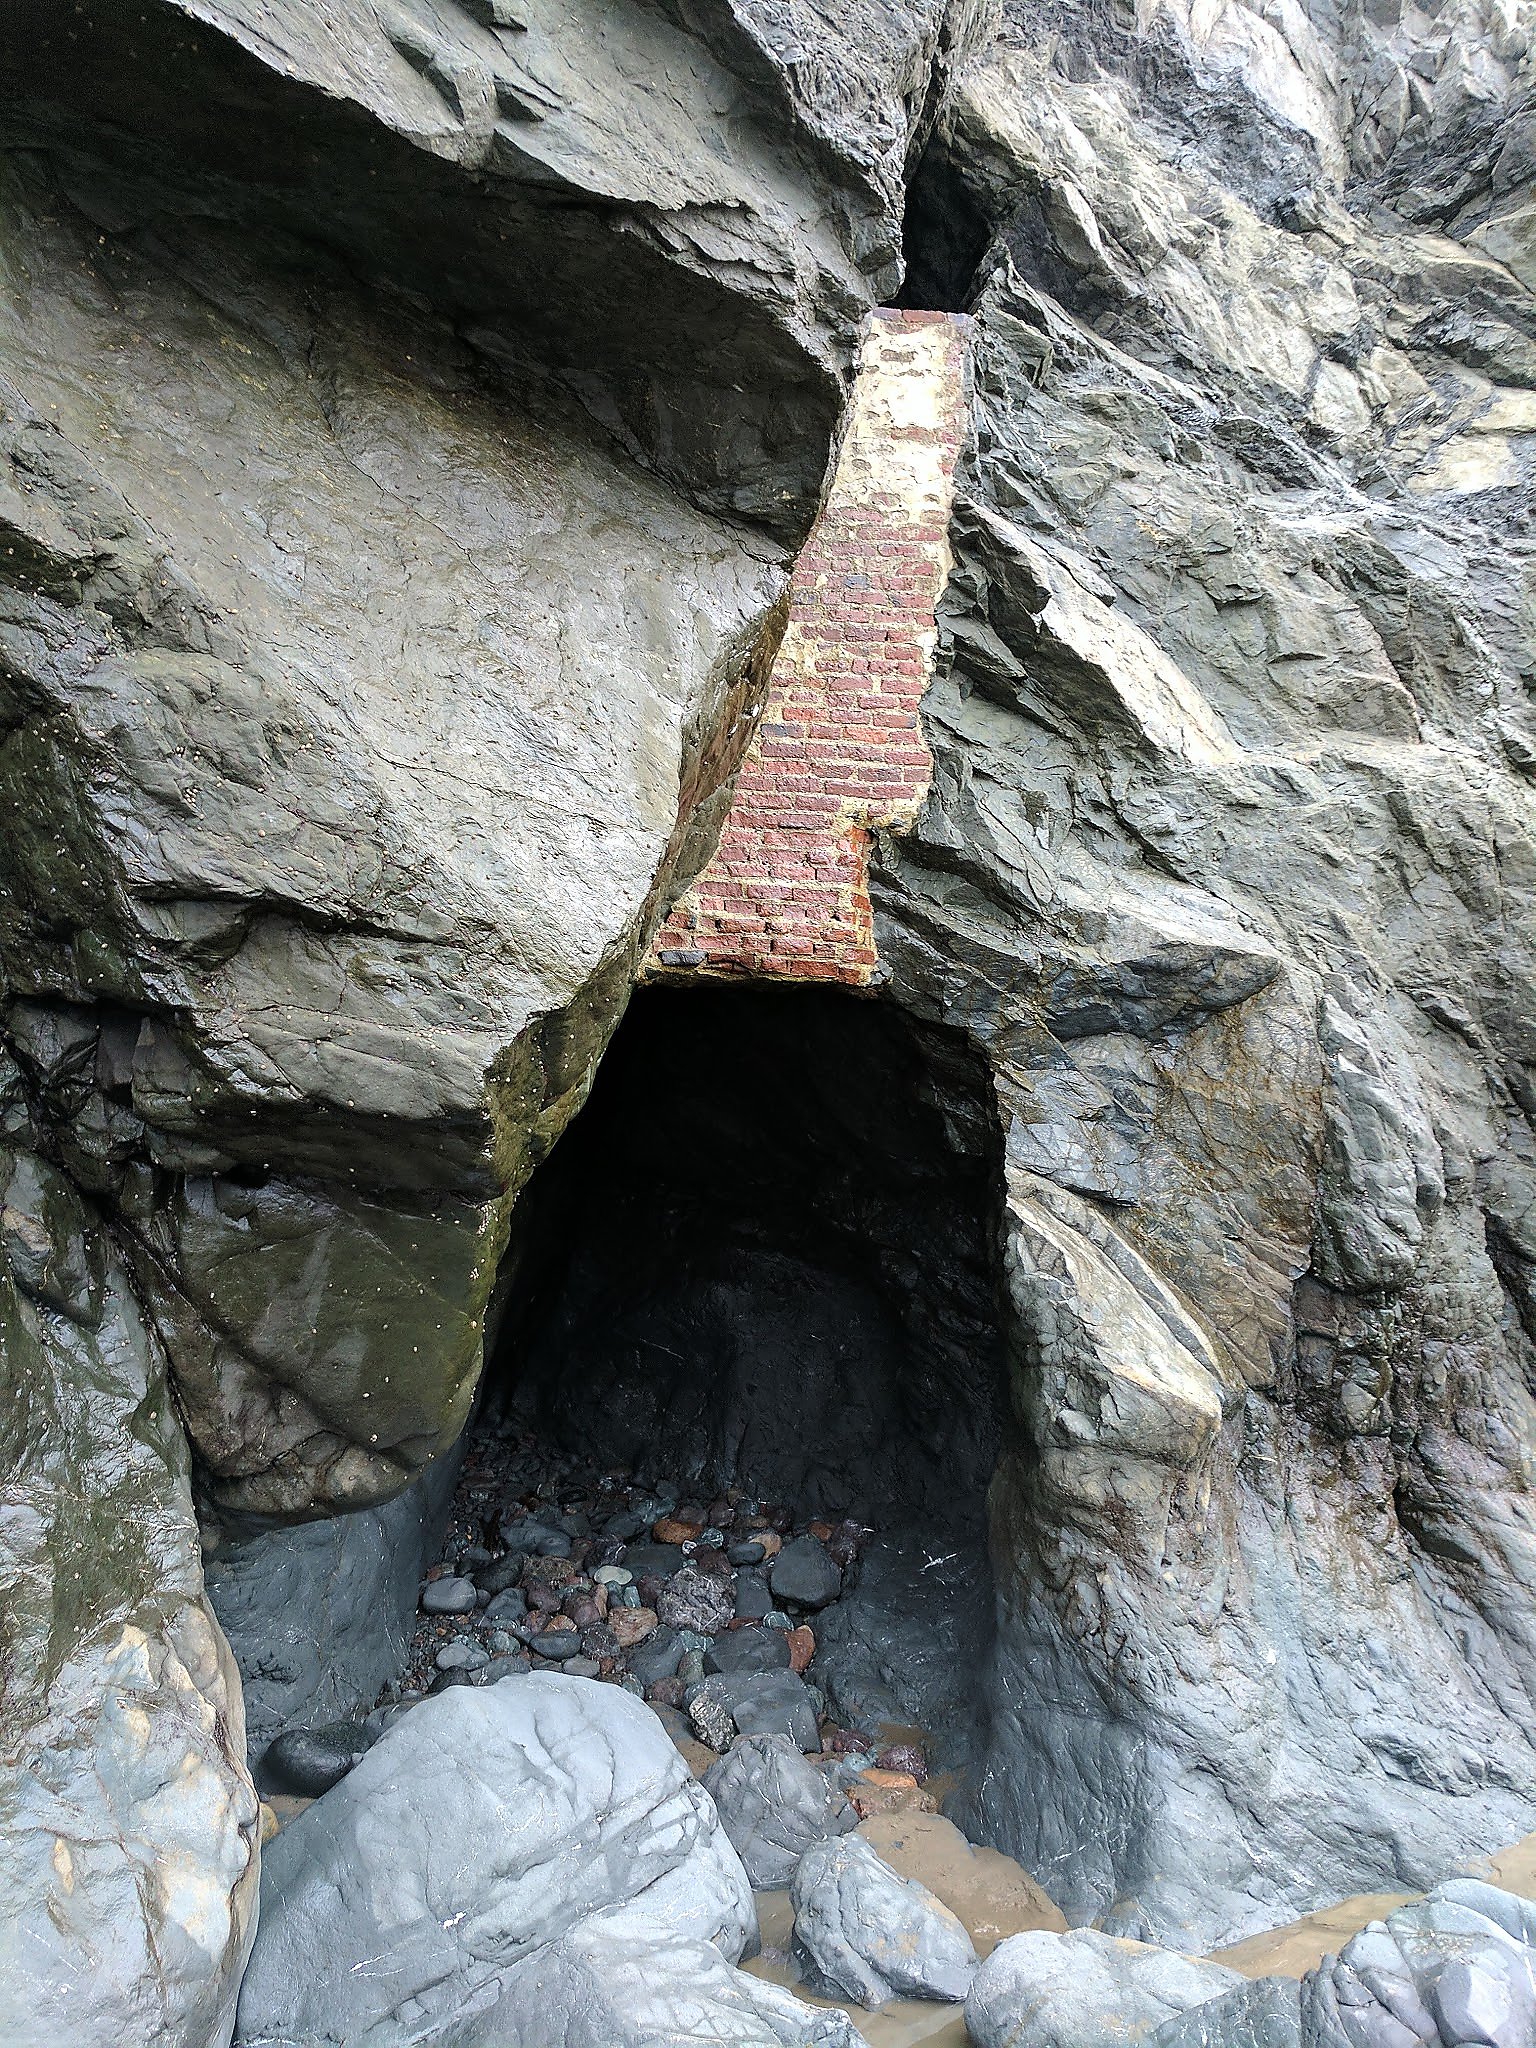 coal mine end exploration king land hidden entrance tides sf aid 1891 discovered vein